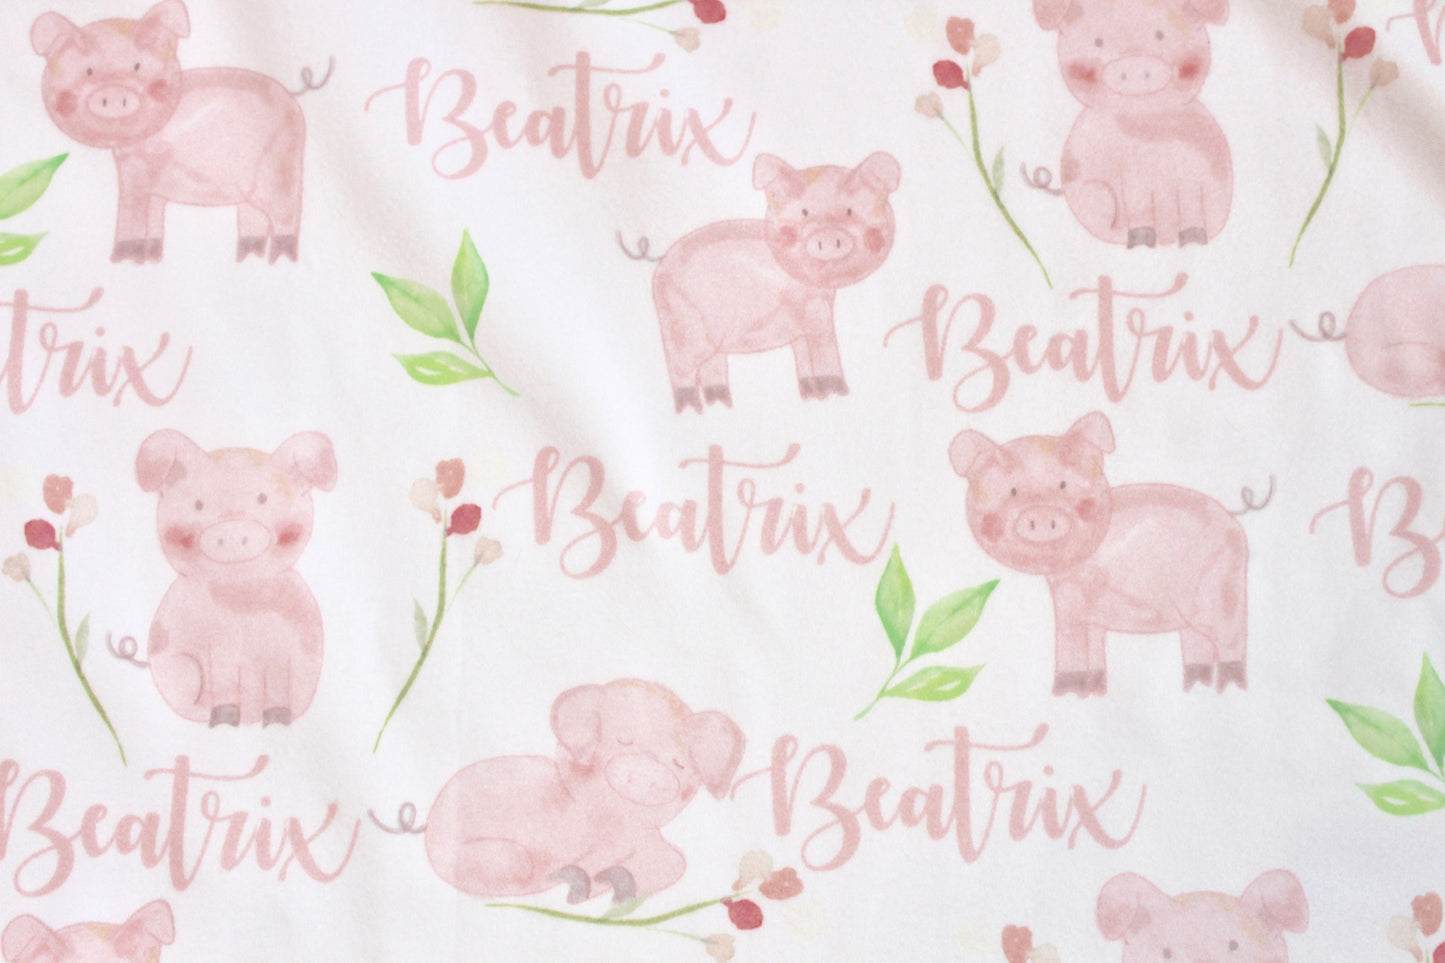 Personalized Baby Blanket/Pig Baby Blanket/Farm Blanket/Organic/Swaddling Blanket